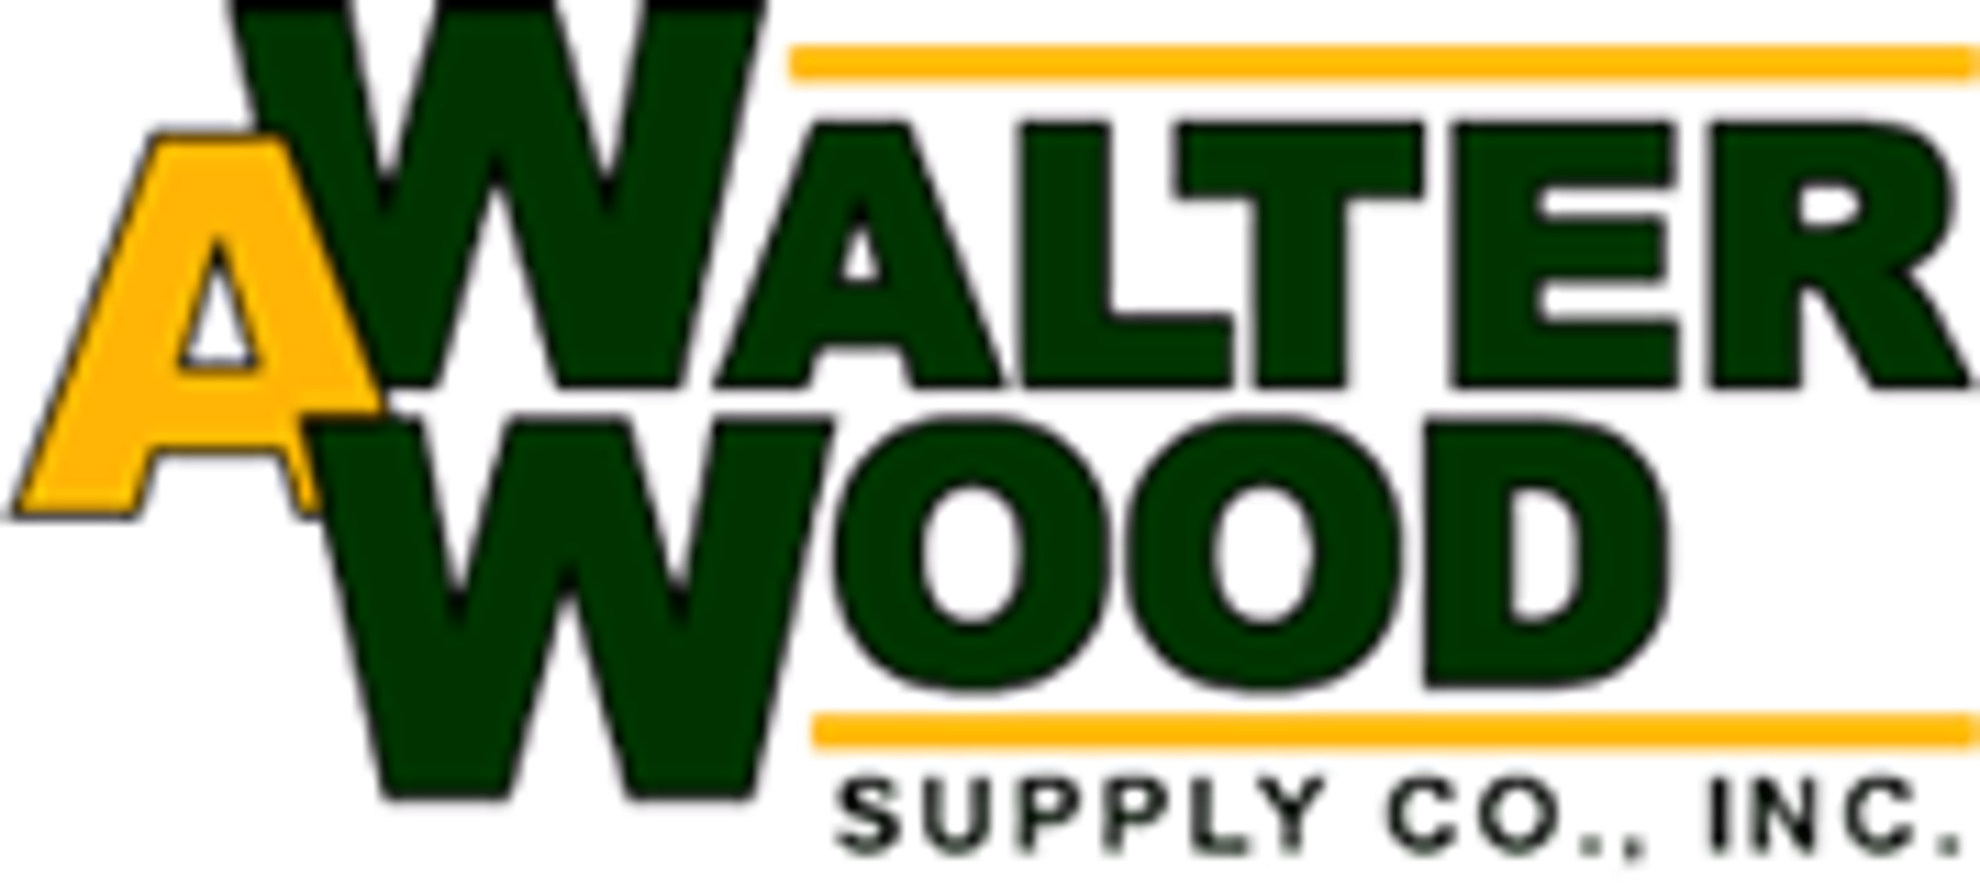 Walter A Wood